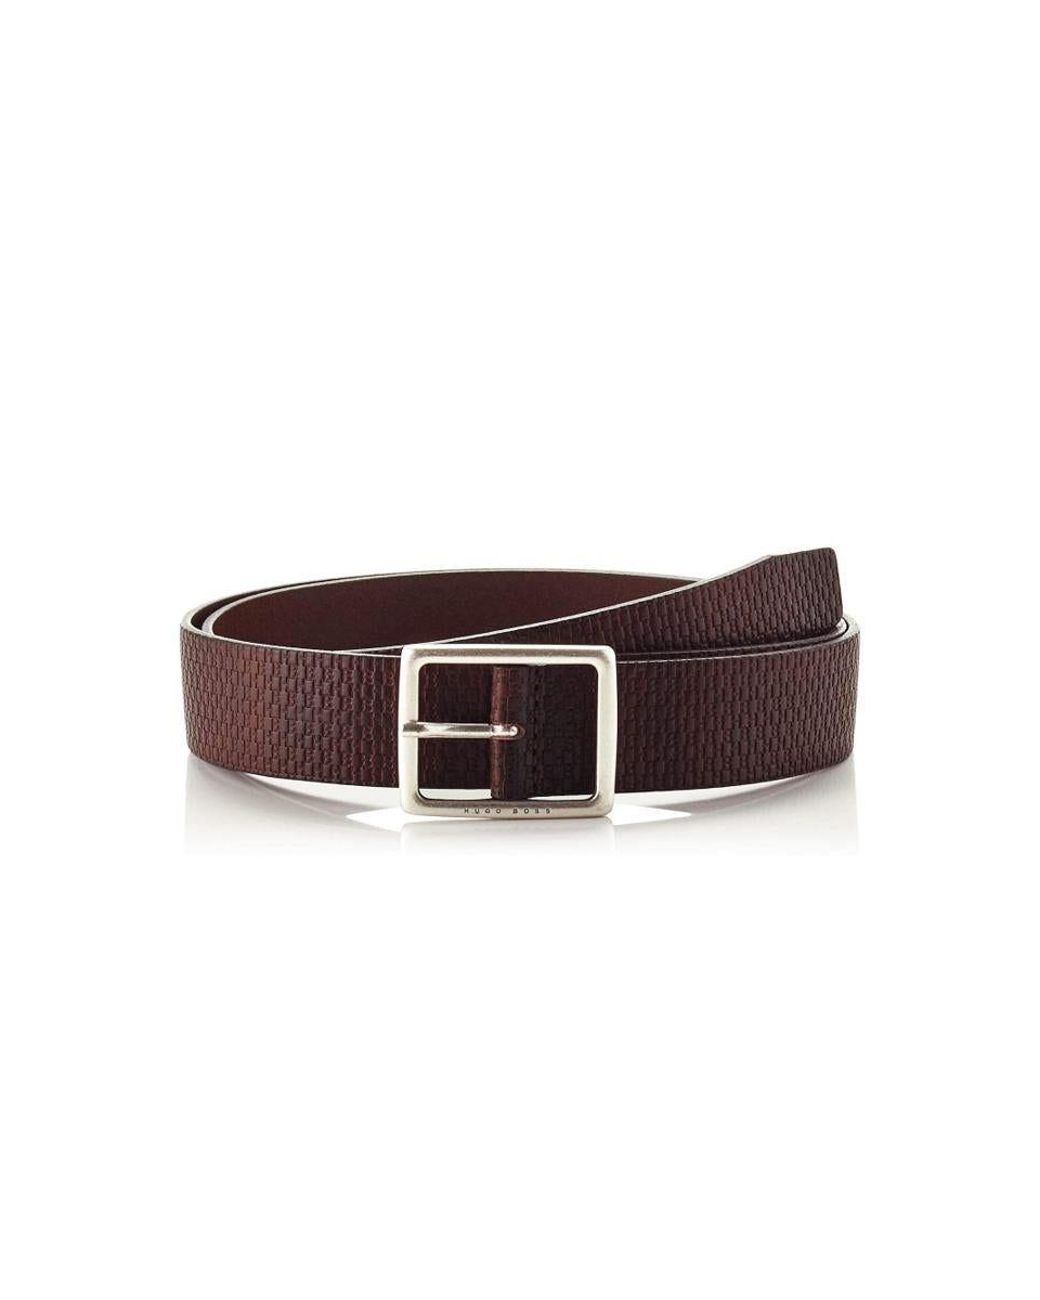 BOSS - Italian-leather belt with monogram plaque buckle